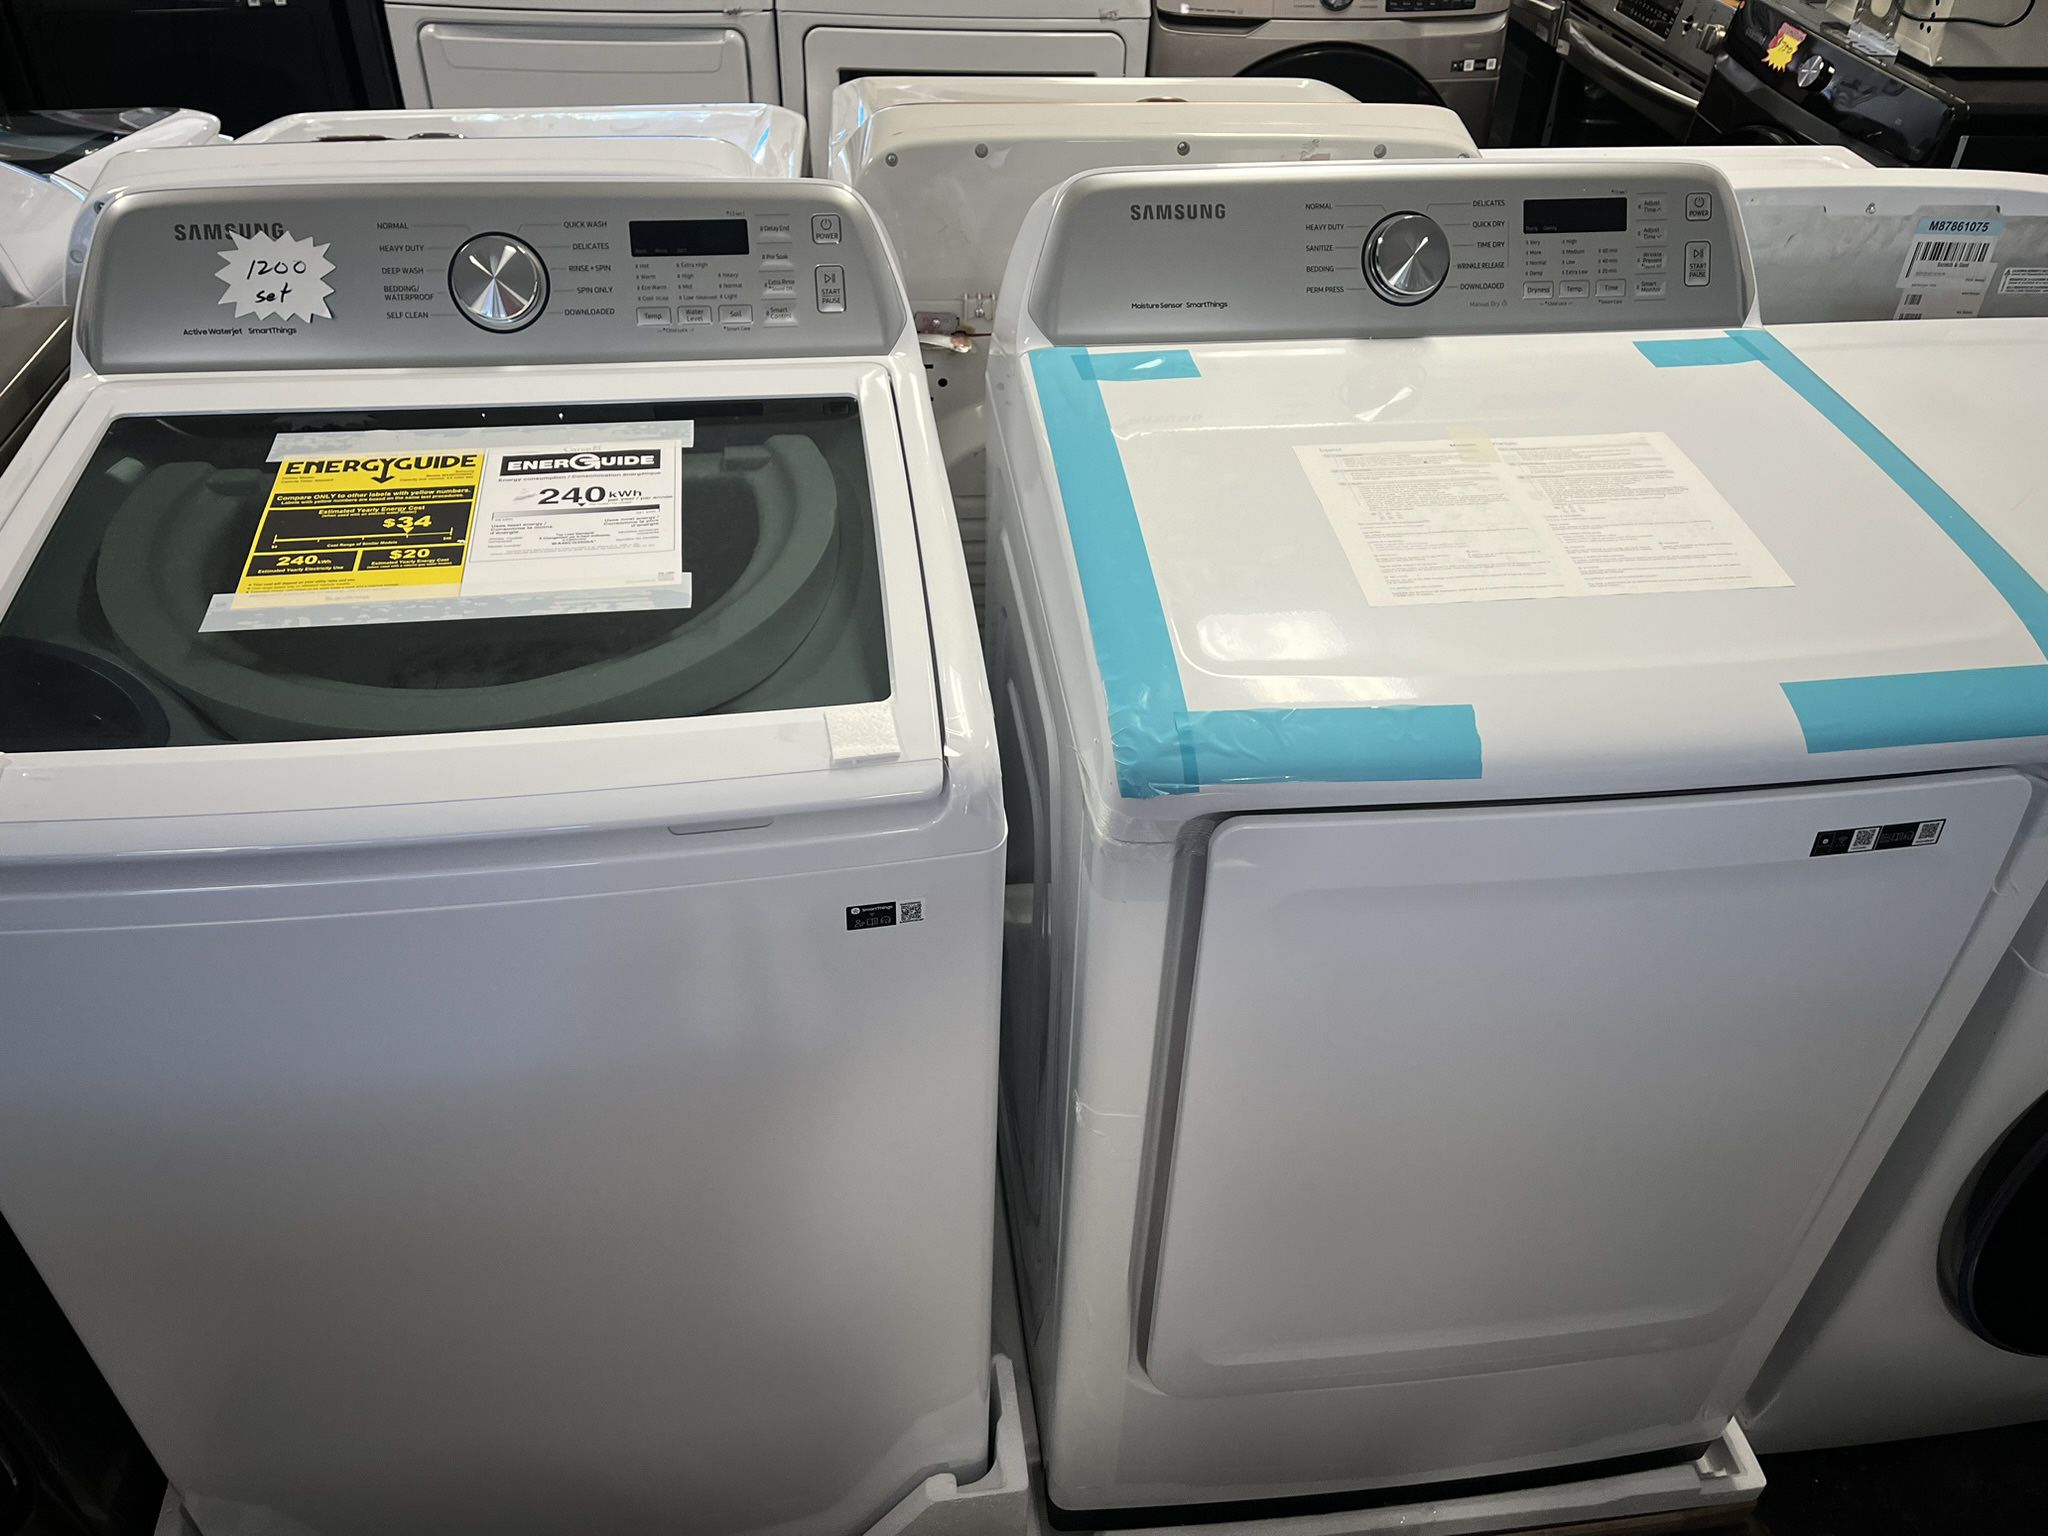 ‼️‼️ Samsung Washer Dryer Set Top Loaders Washer Has Agitator ‼️‼️